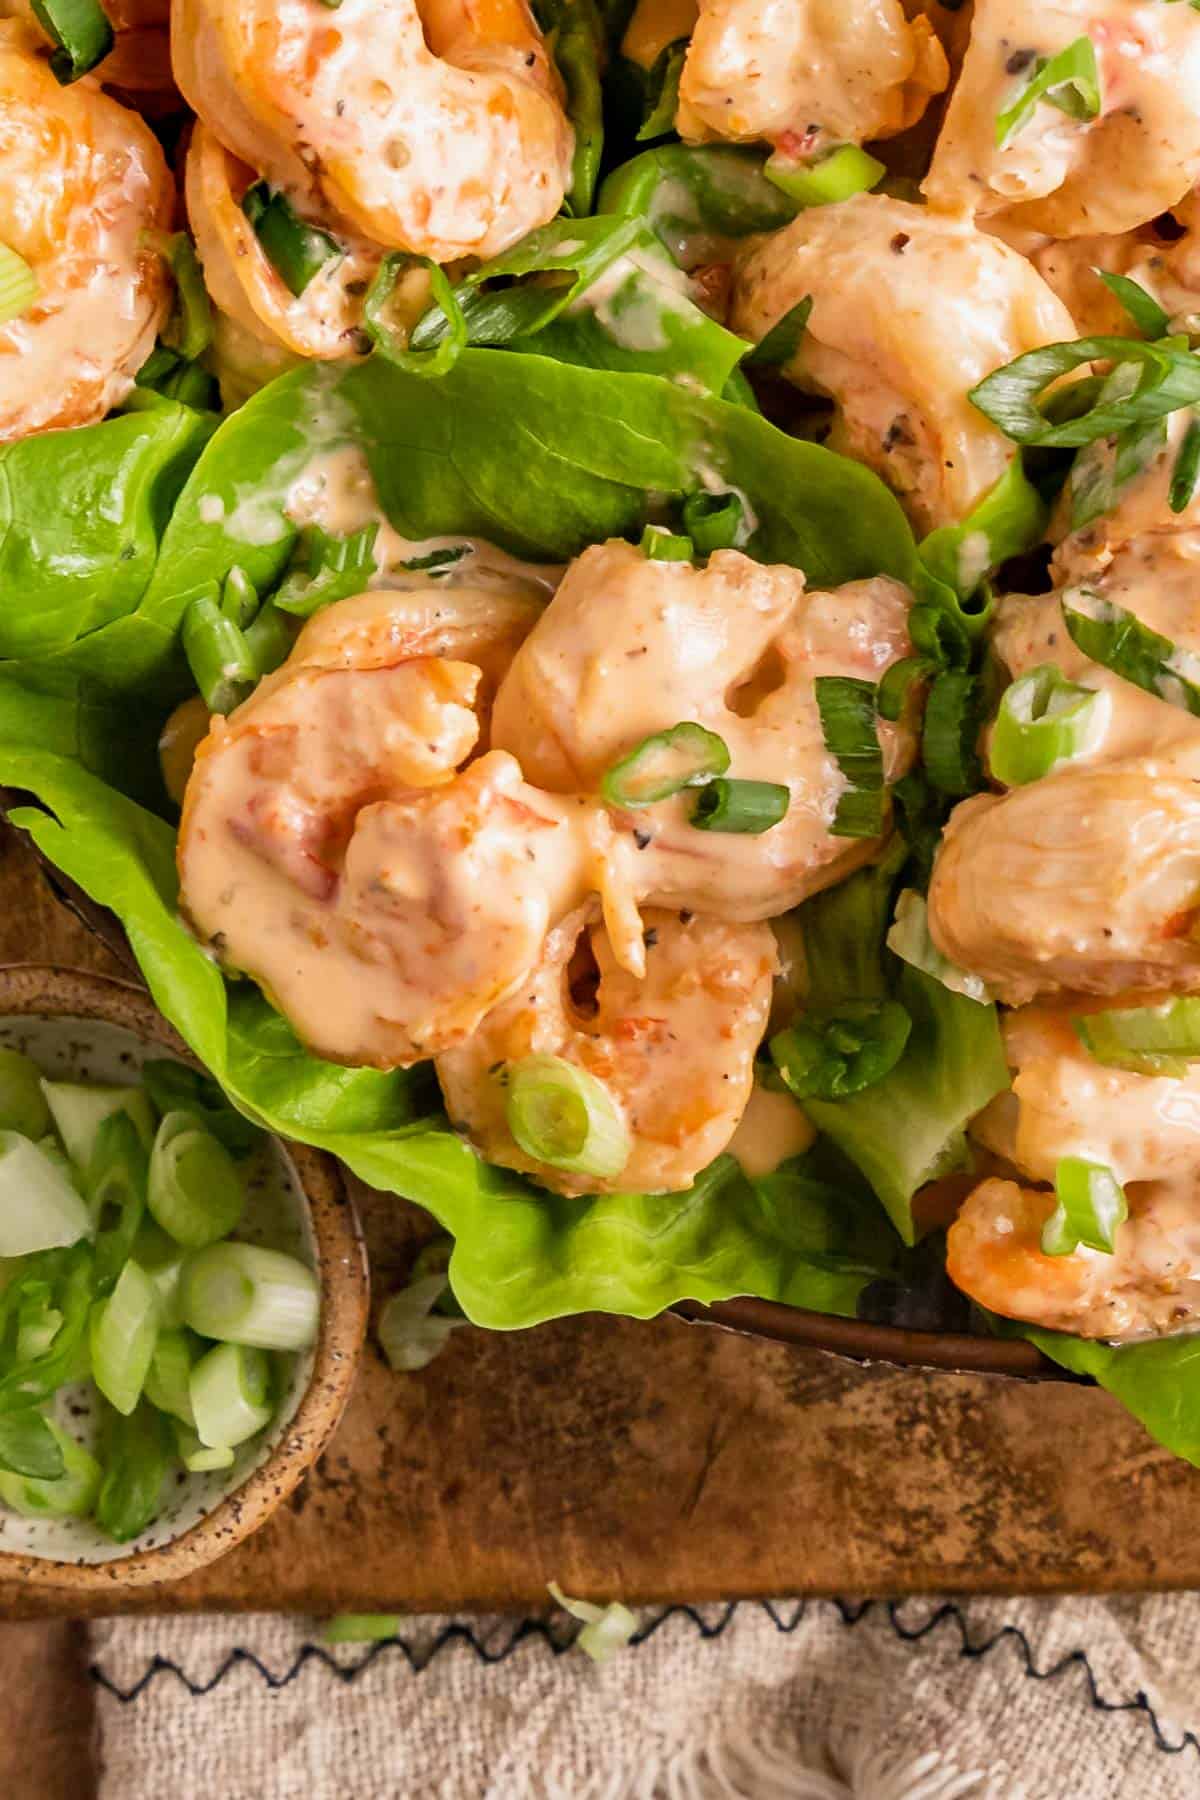 a close up showing bang bang sauce on shrimp lettuce wraps.